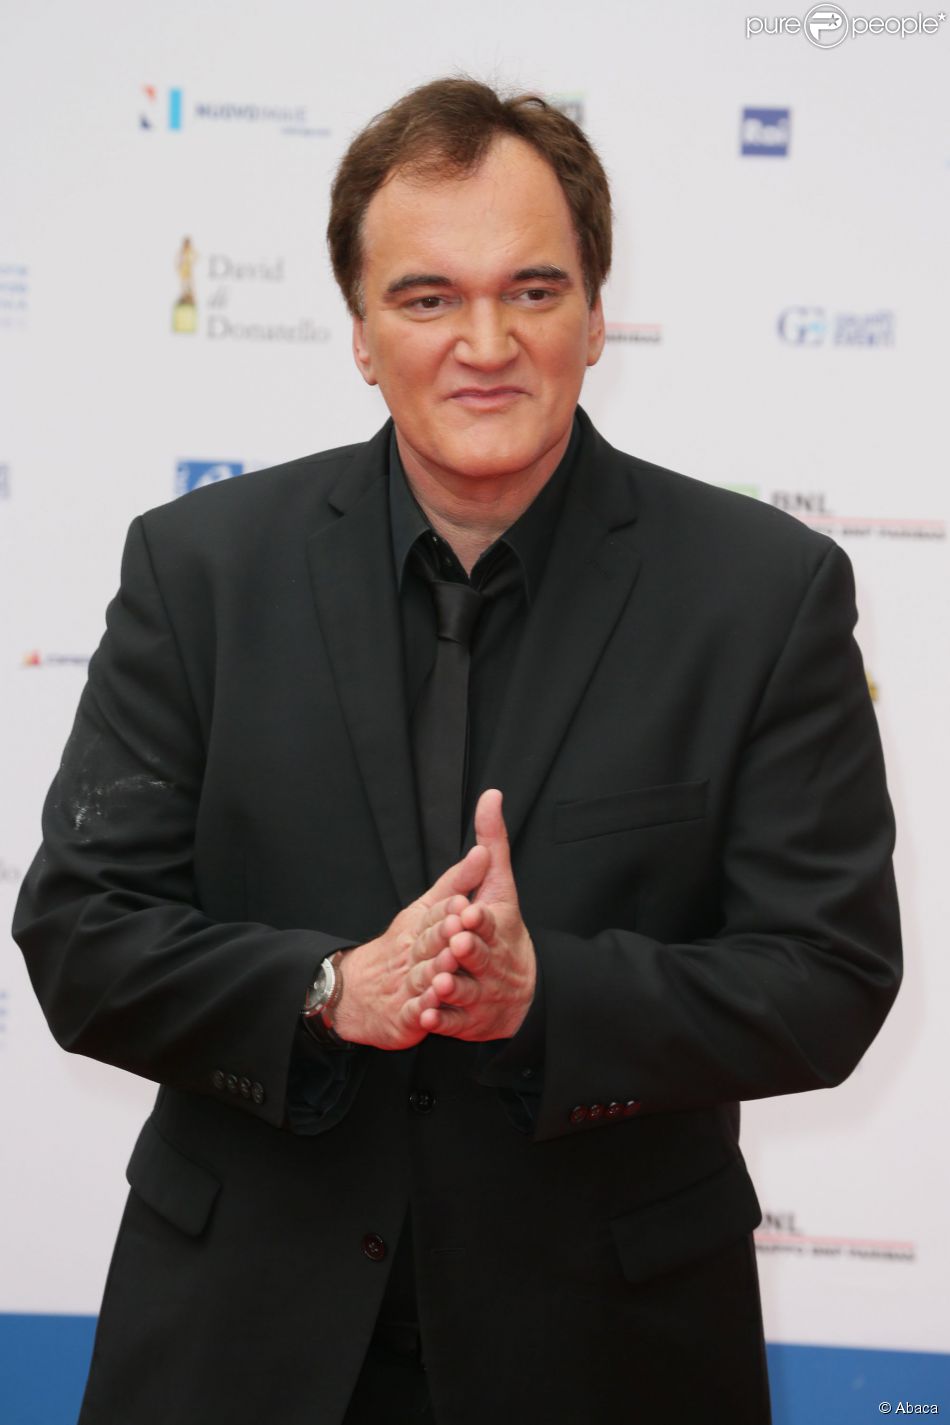 Quentin Tarantino attends the 2015 David di Donatello Awards Ceremony in Rome, Italy on June 12, 2015. Photo by Alessia Paradisi/ABACAPRESS.COM13/06/2015 - Rome